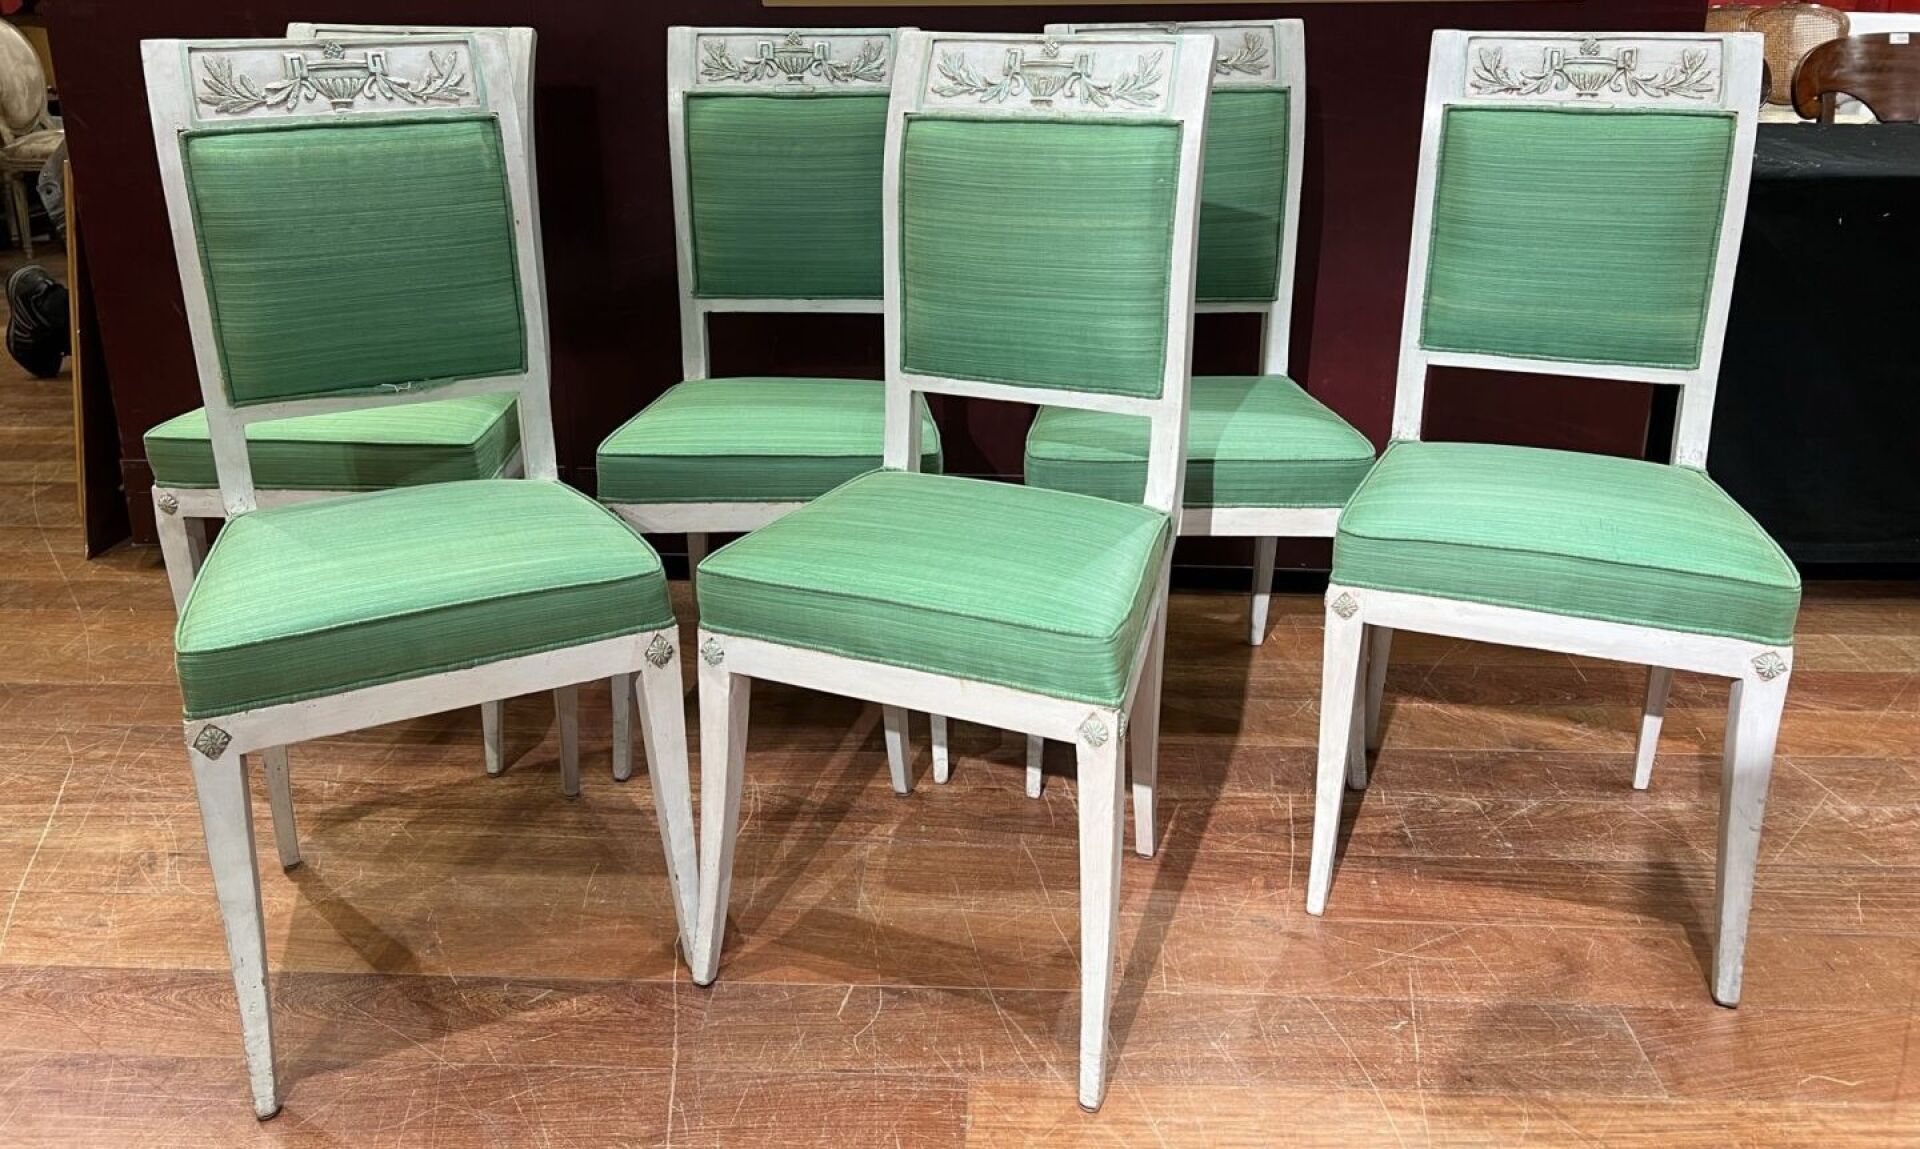 Null 一套六把 Directoire 时期的漆木椅。
椅背装饰有花瓶和棕榈图案，椅脚为马刀形。
略有瑕疵。
H.92 宽 42 深 37 厘米